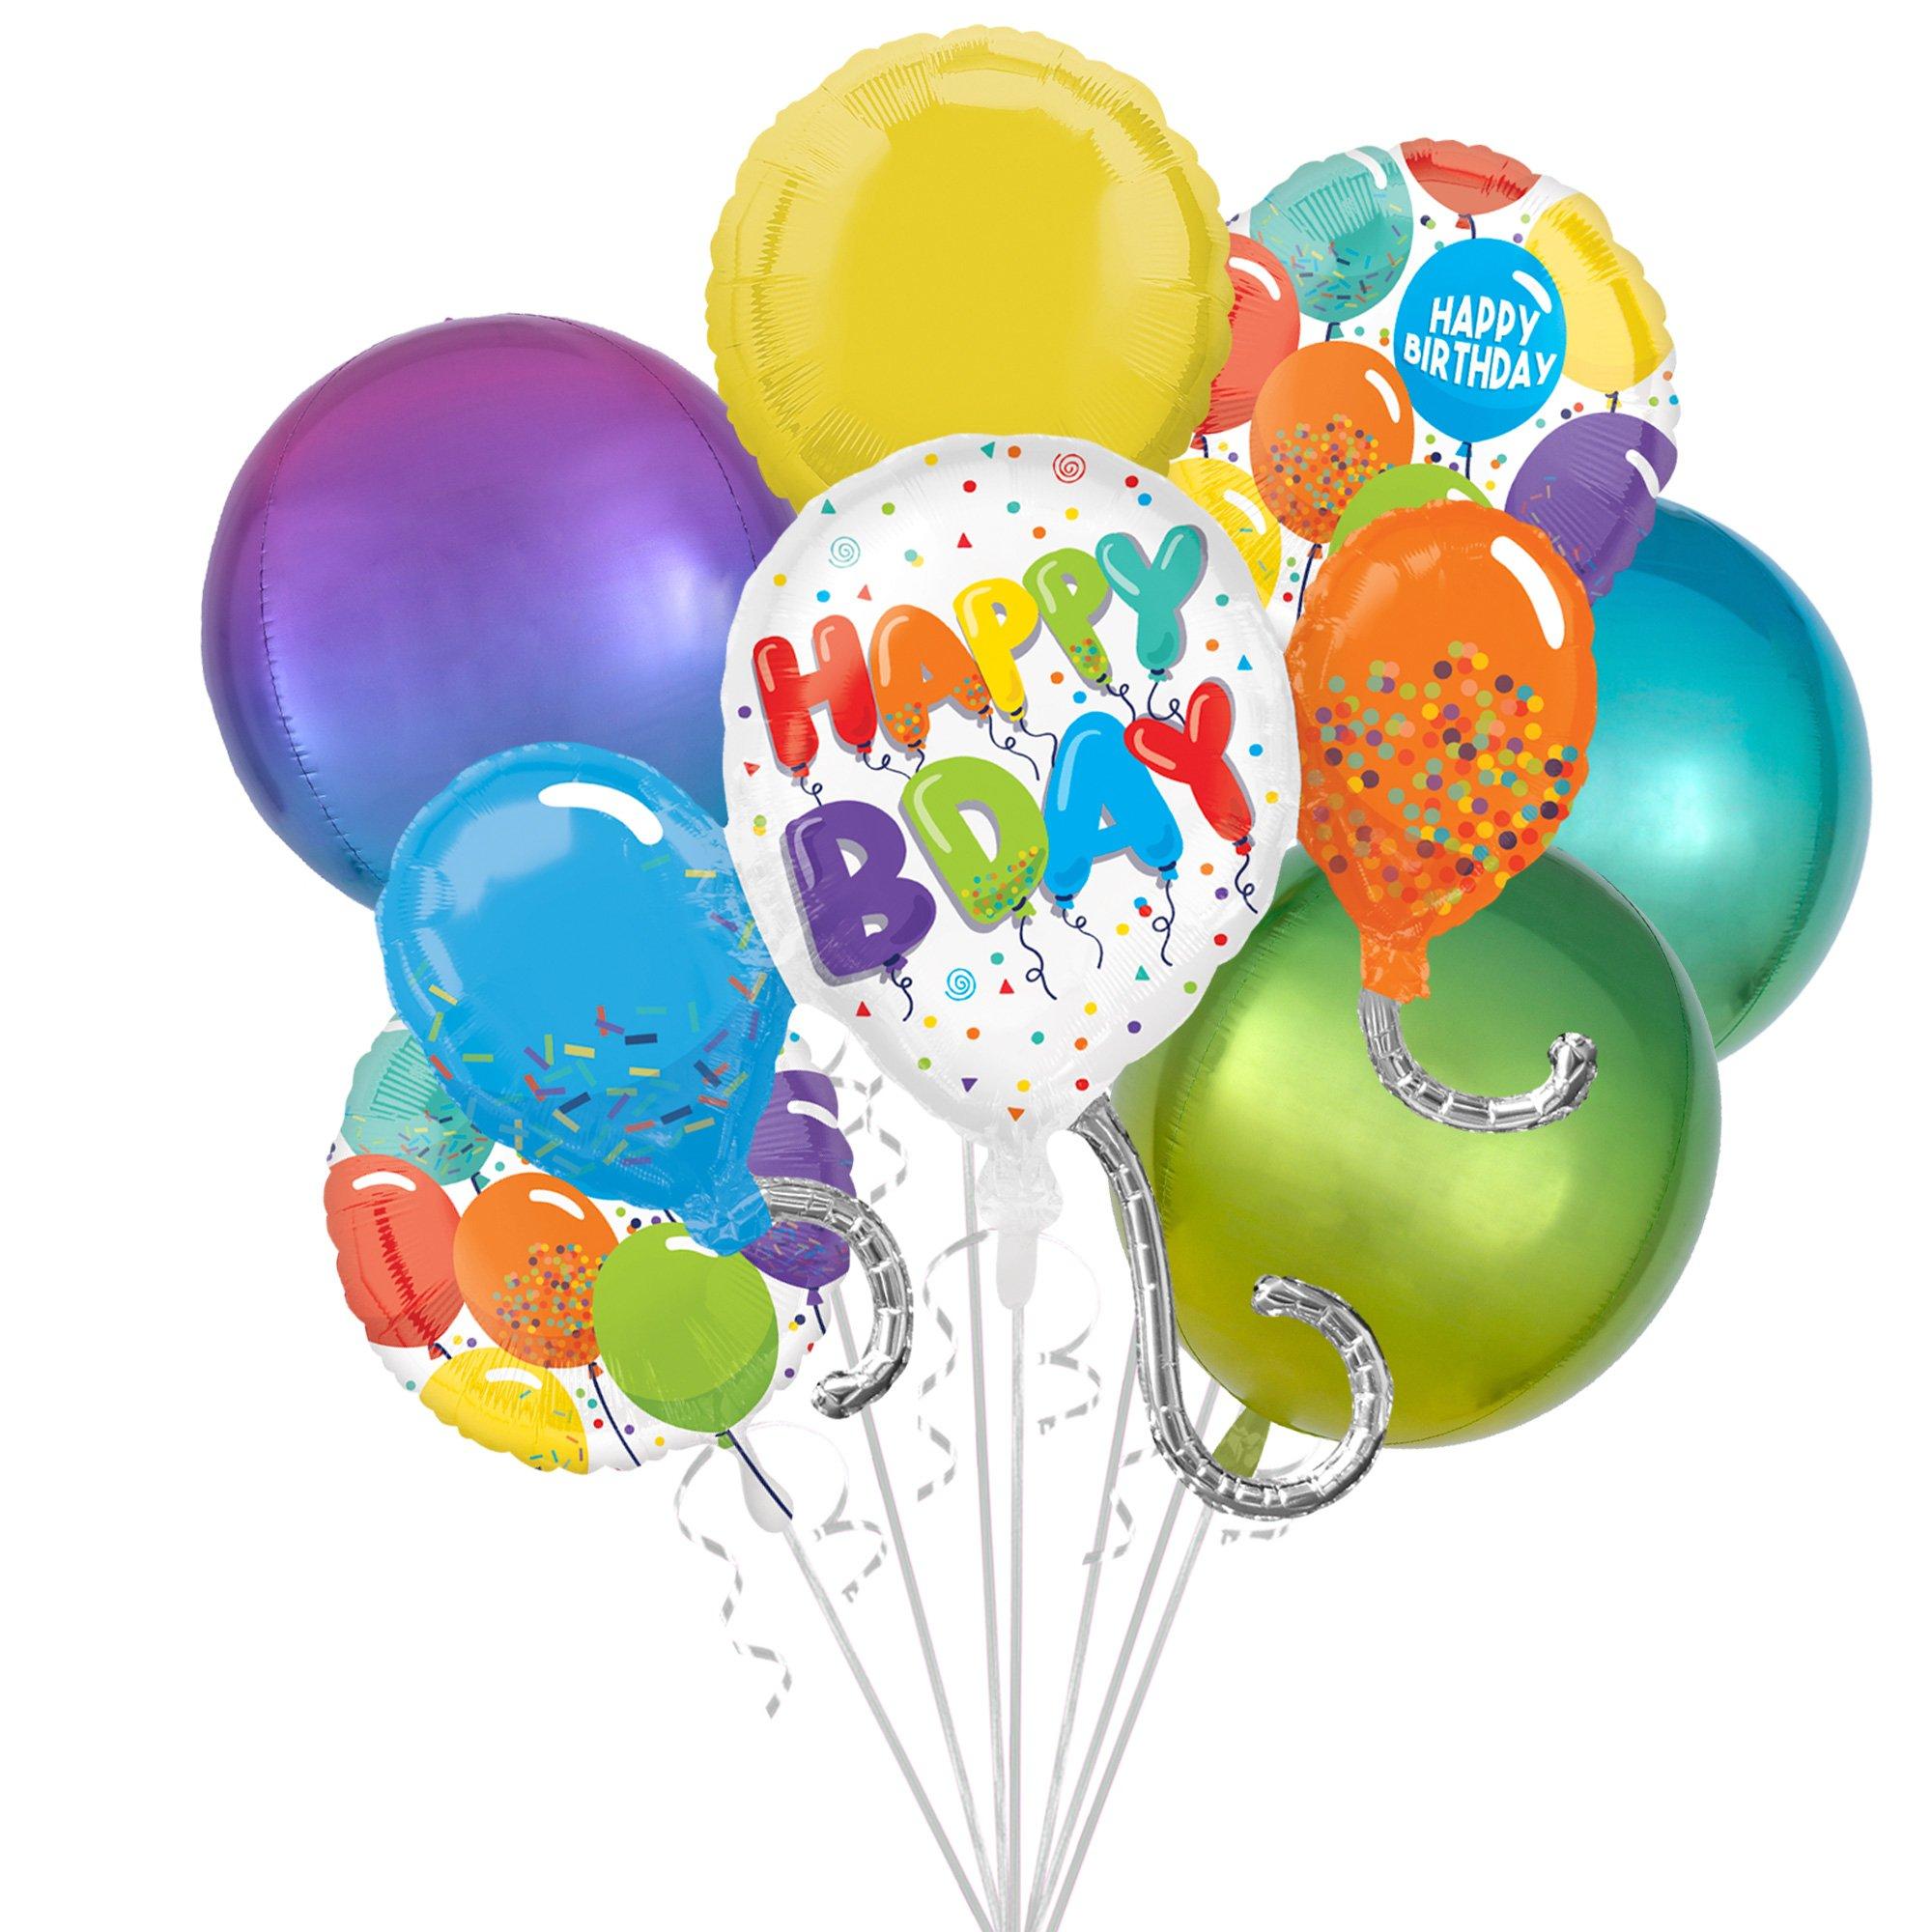 Colourful Happy Birthday Fashion Latex Balloon 6 Pack - Multi